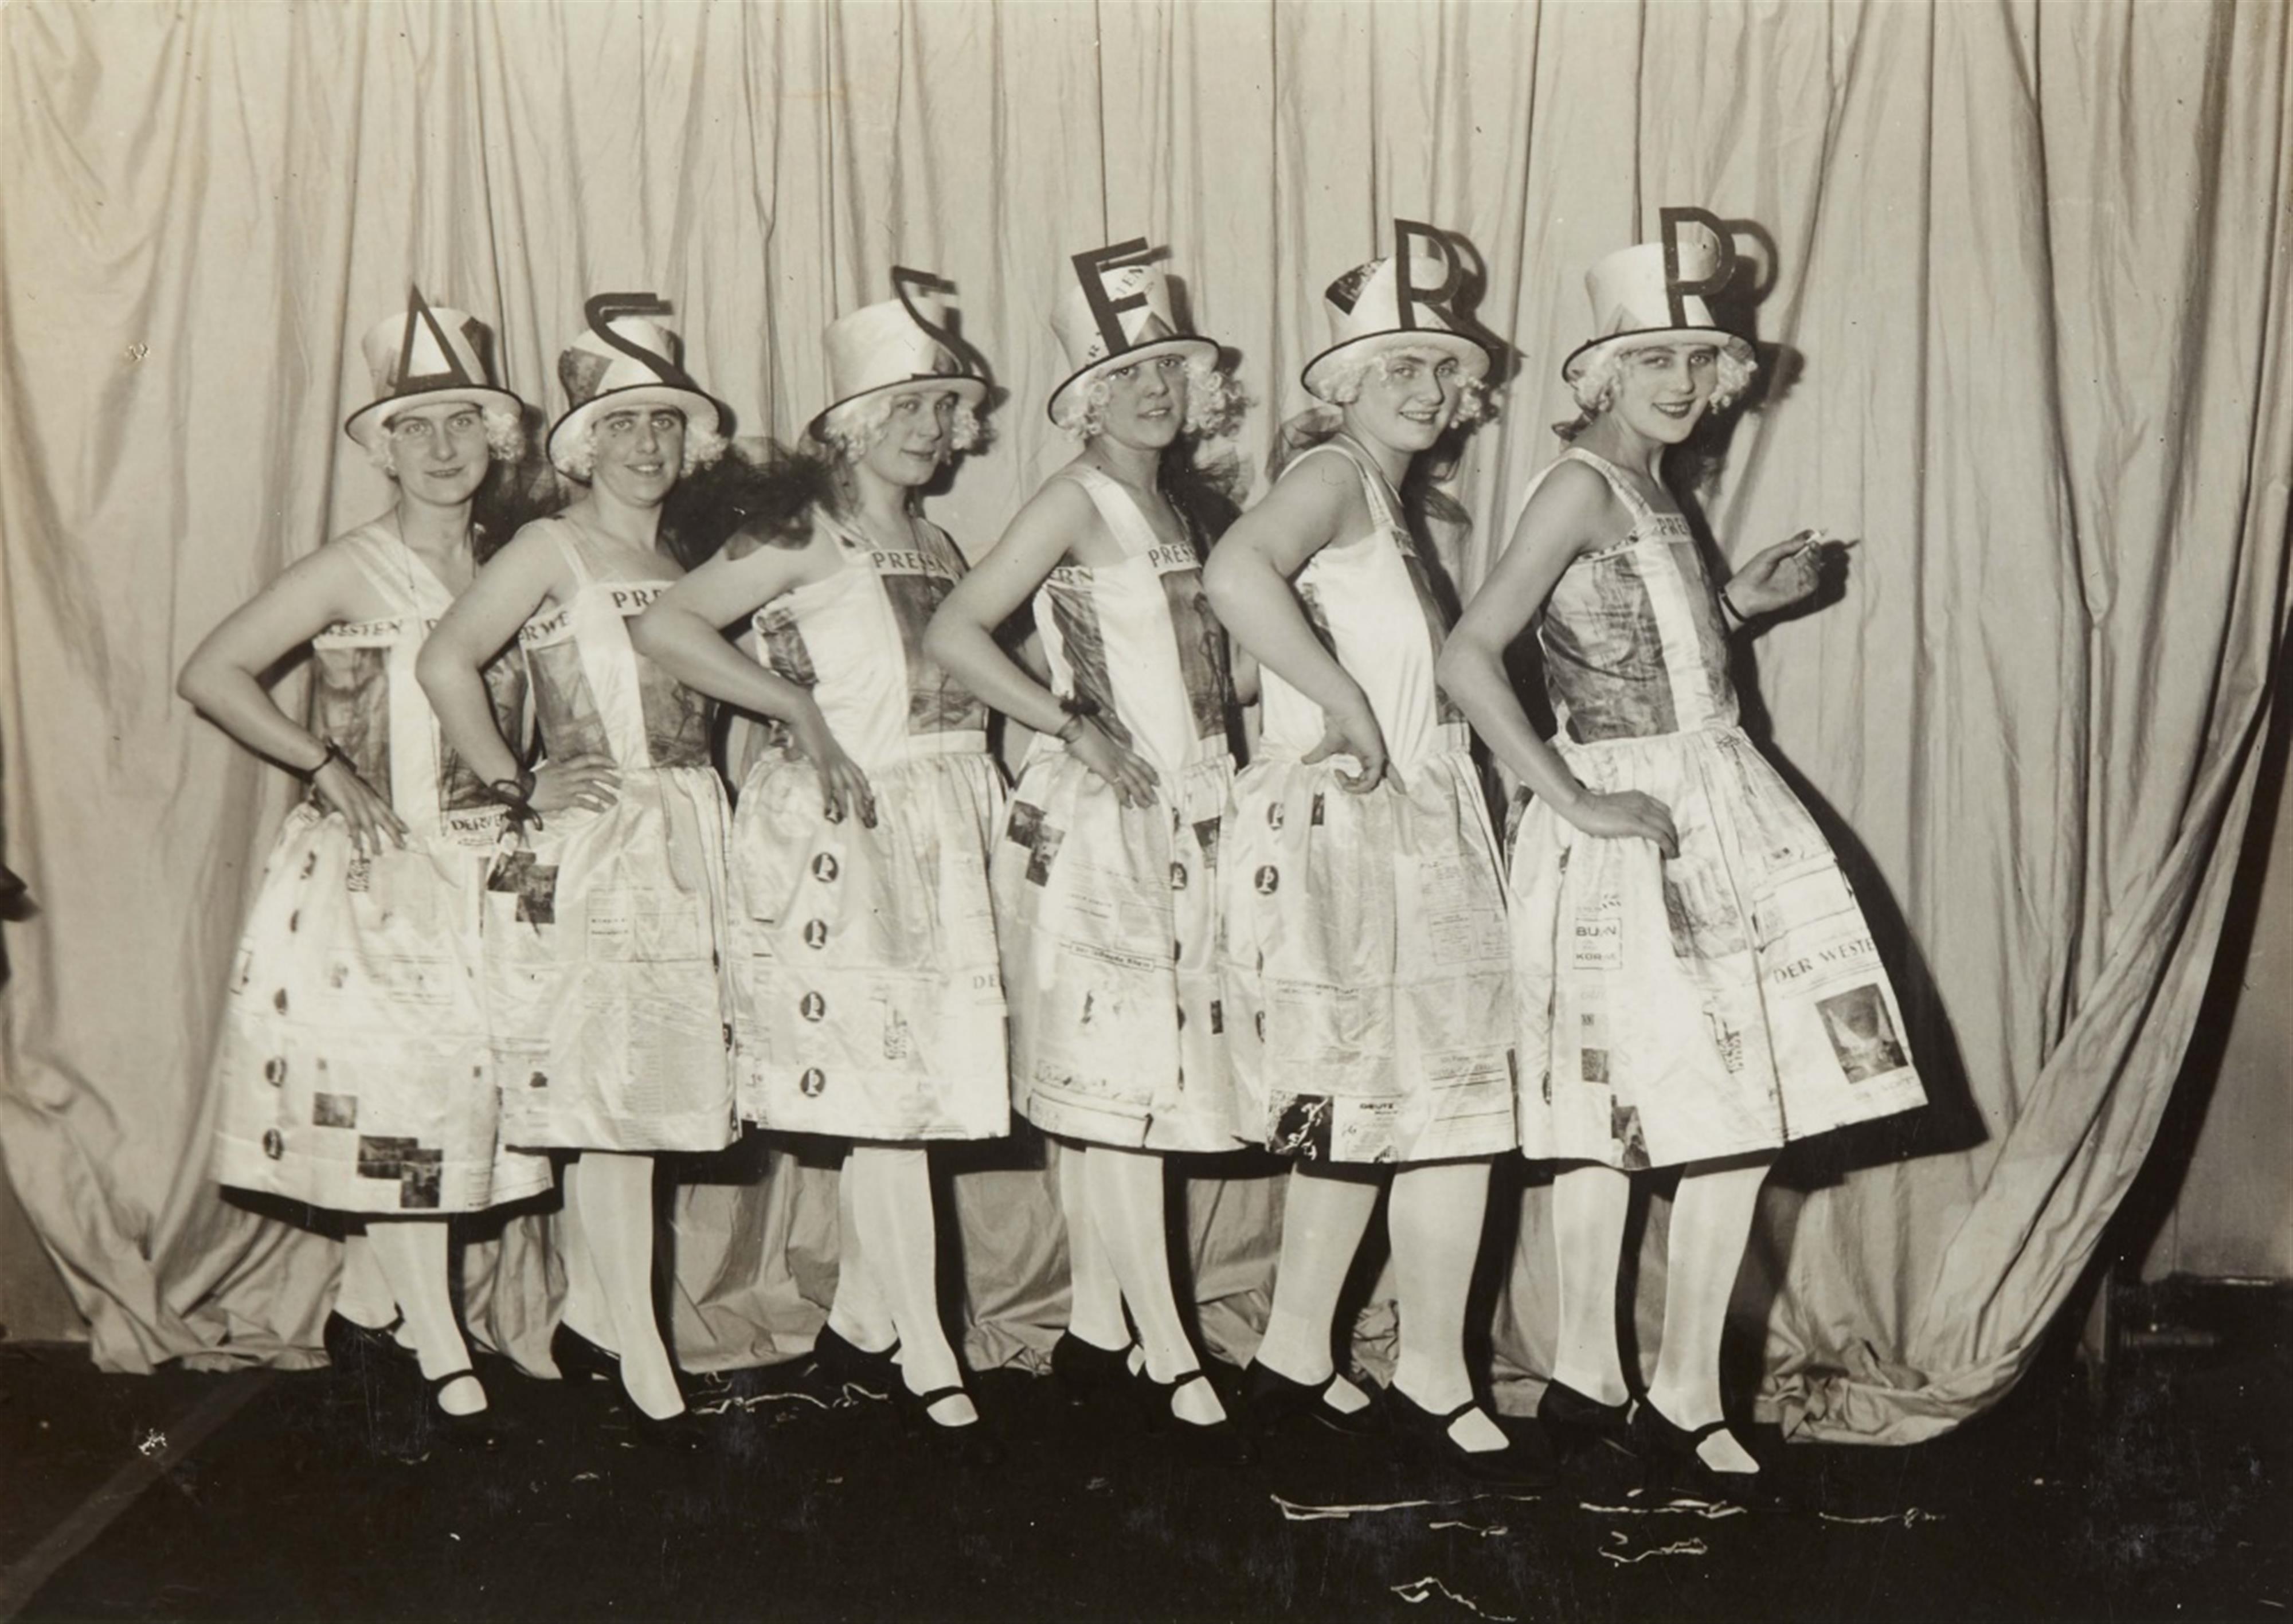 Clemens Hartzenbusch - Untitled (Dancers in 'Pressa' costumes) - image-1